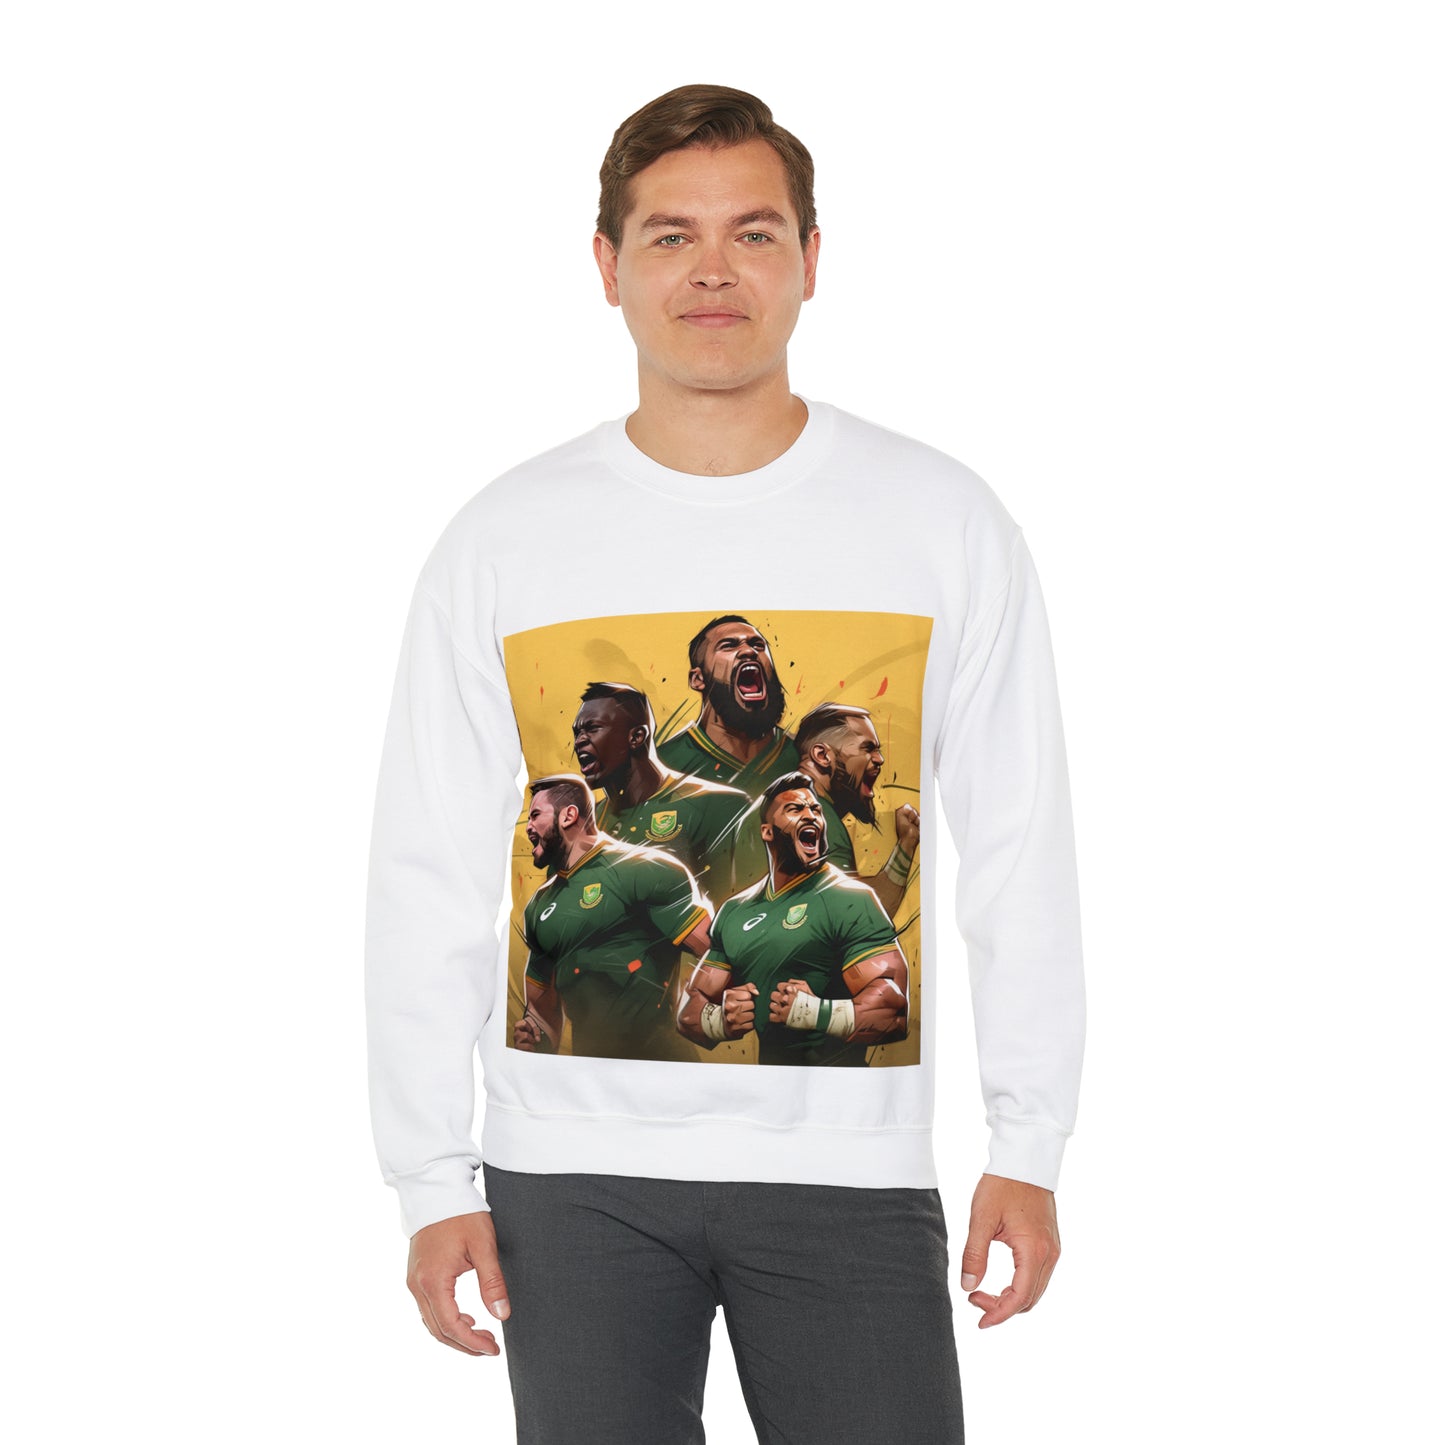 Springboks Celebrating - light sweatshirts